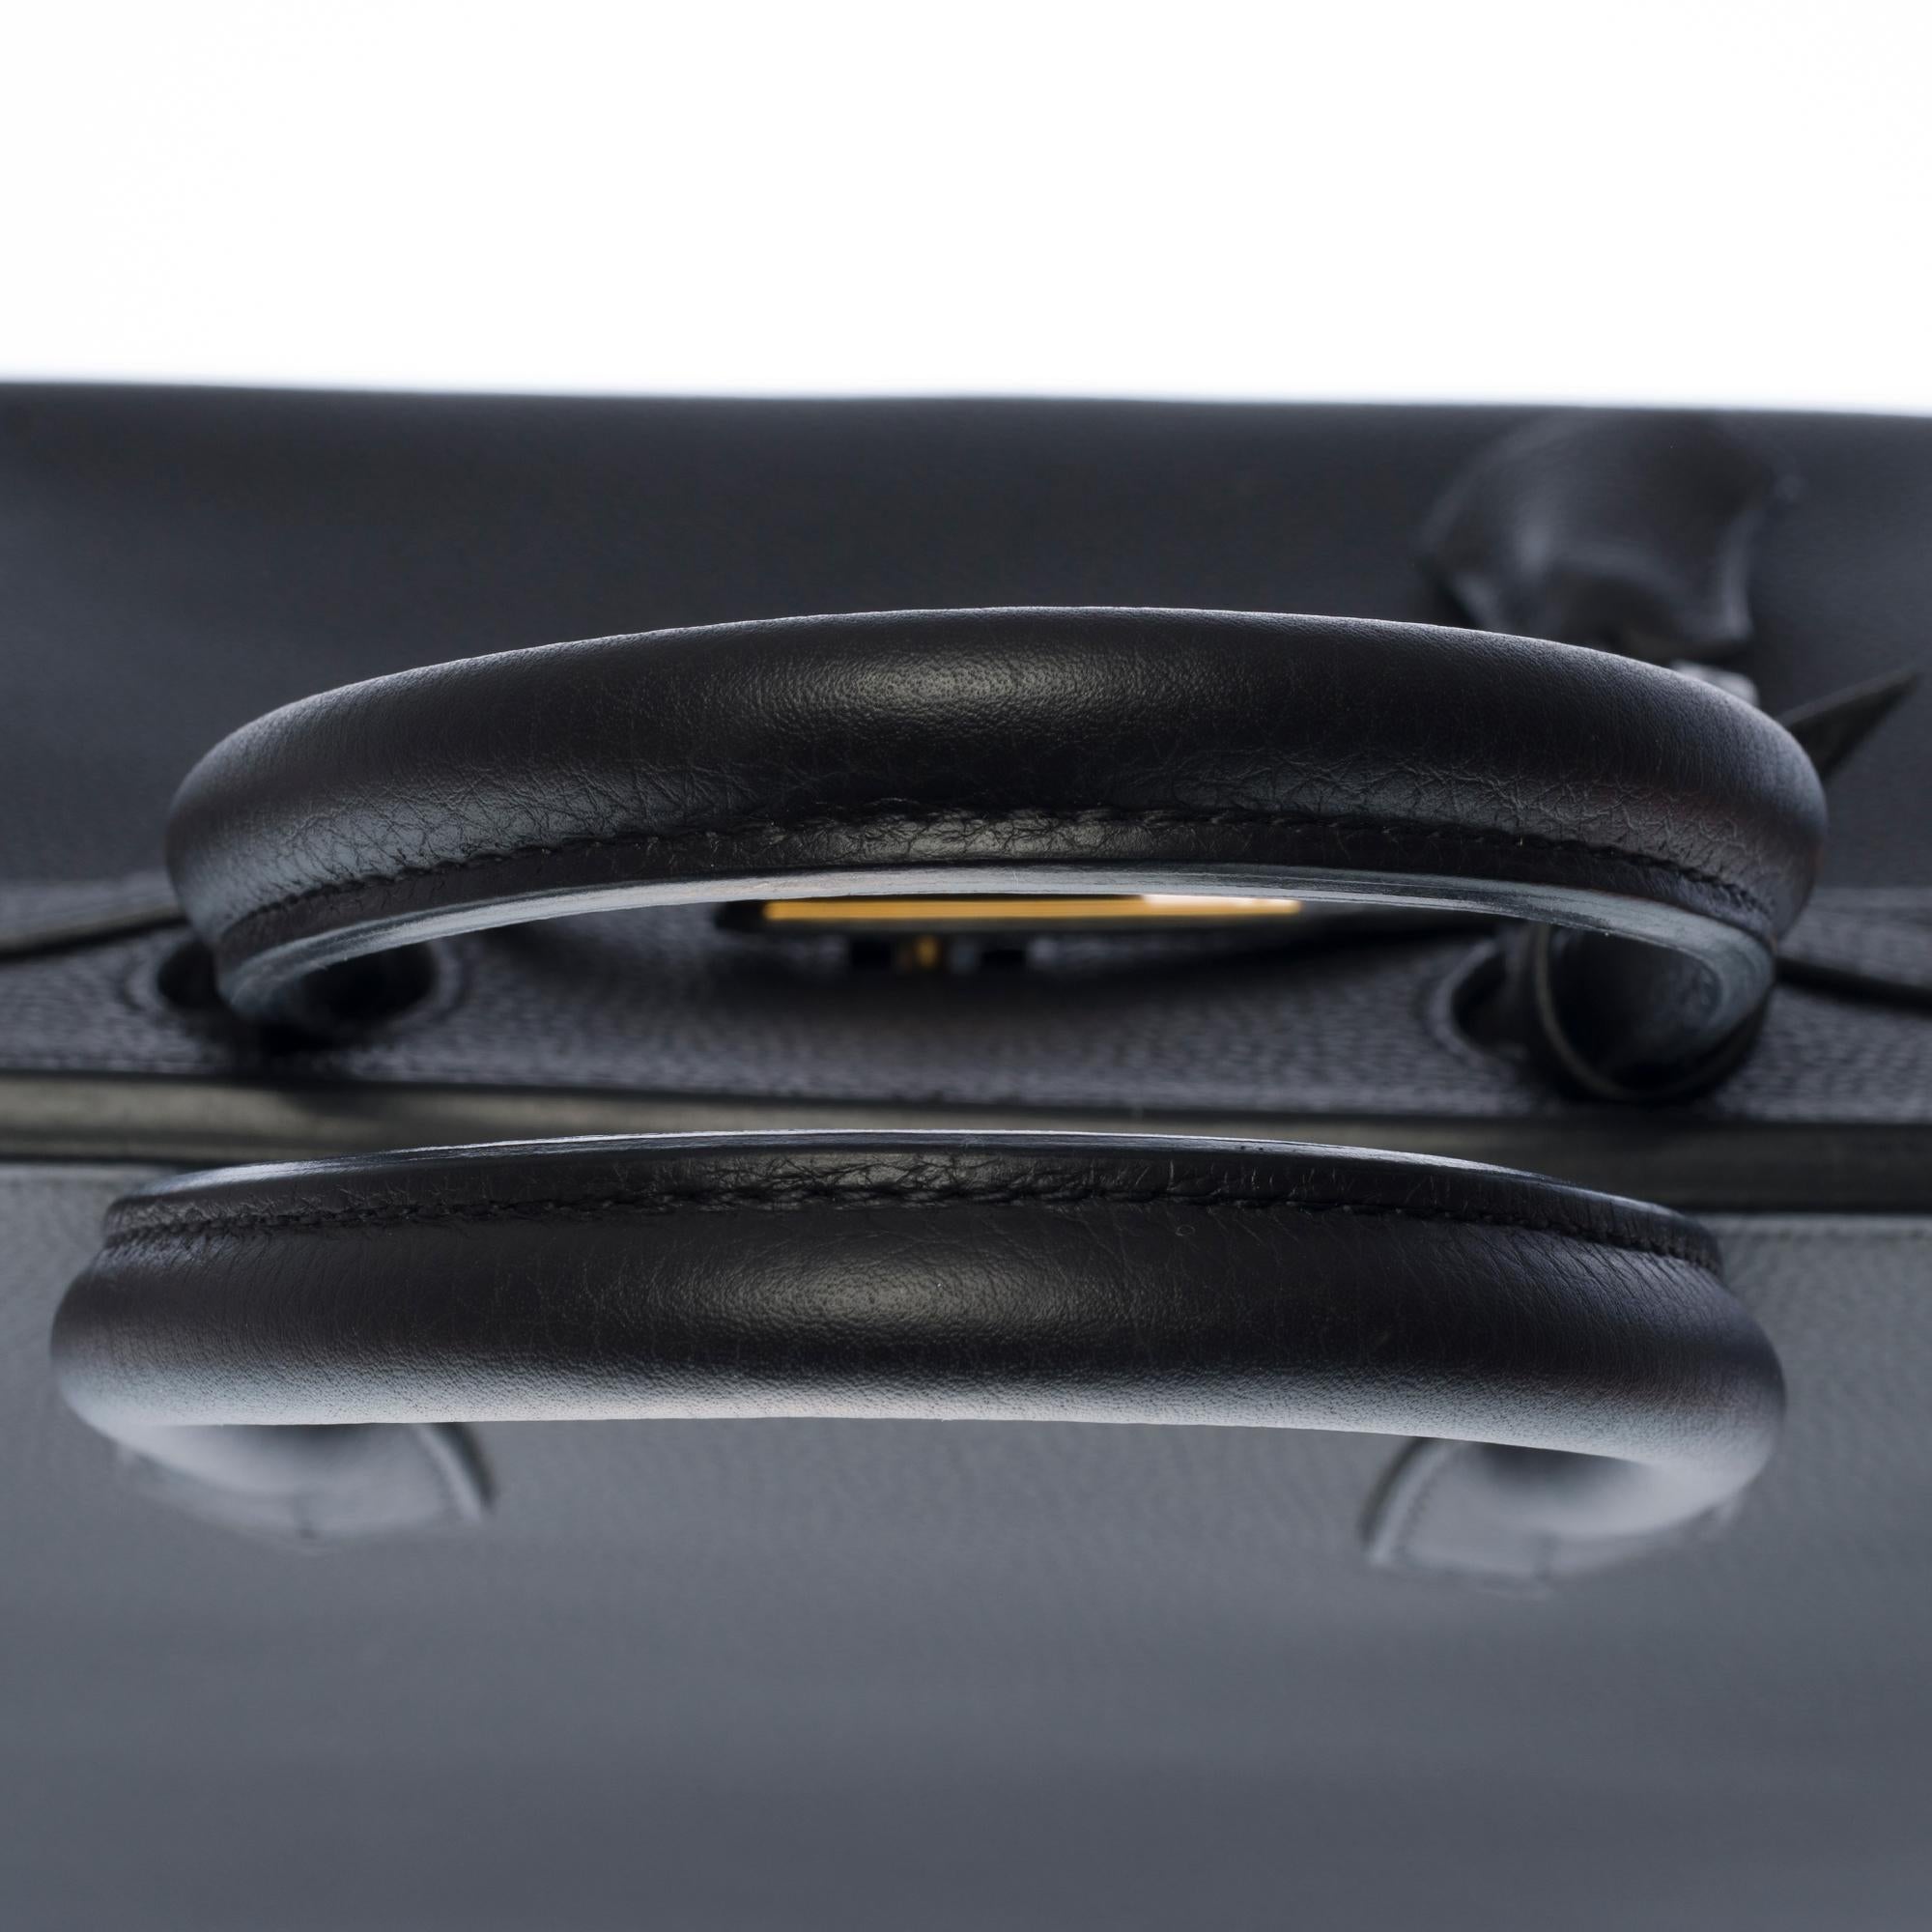 Brand New - Hermès Birkin 30 handbag in Black Togo leather, gold hardware 1